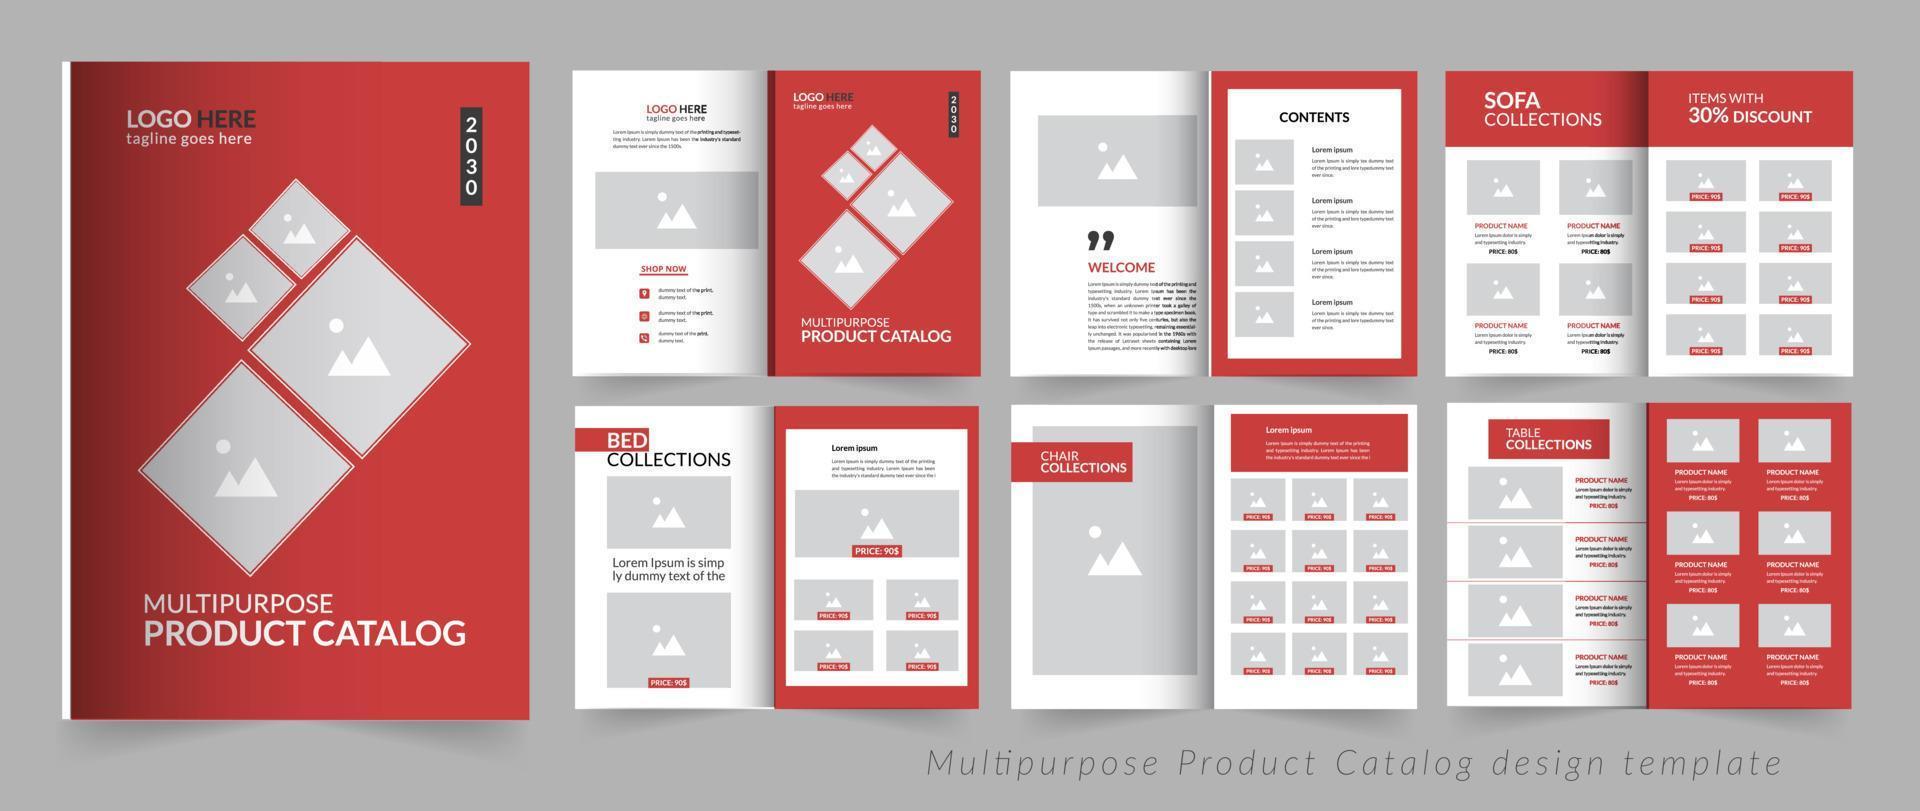 Modern multipurpose product catalog design template vector